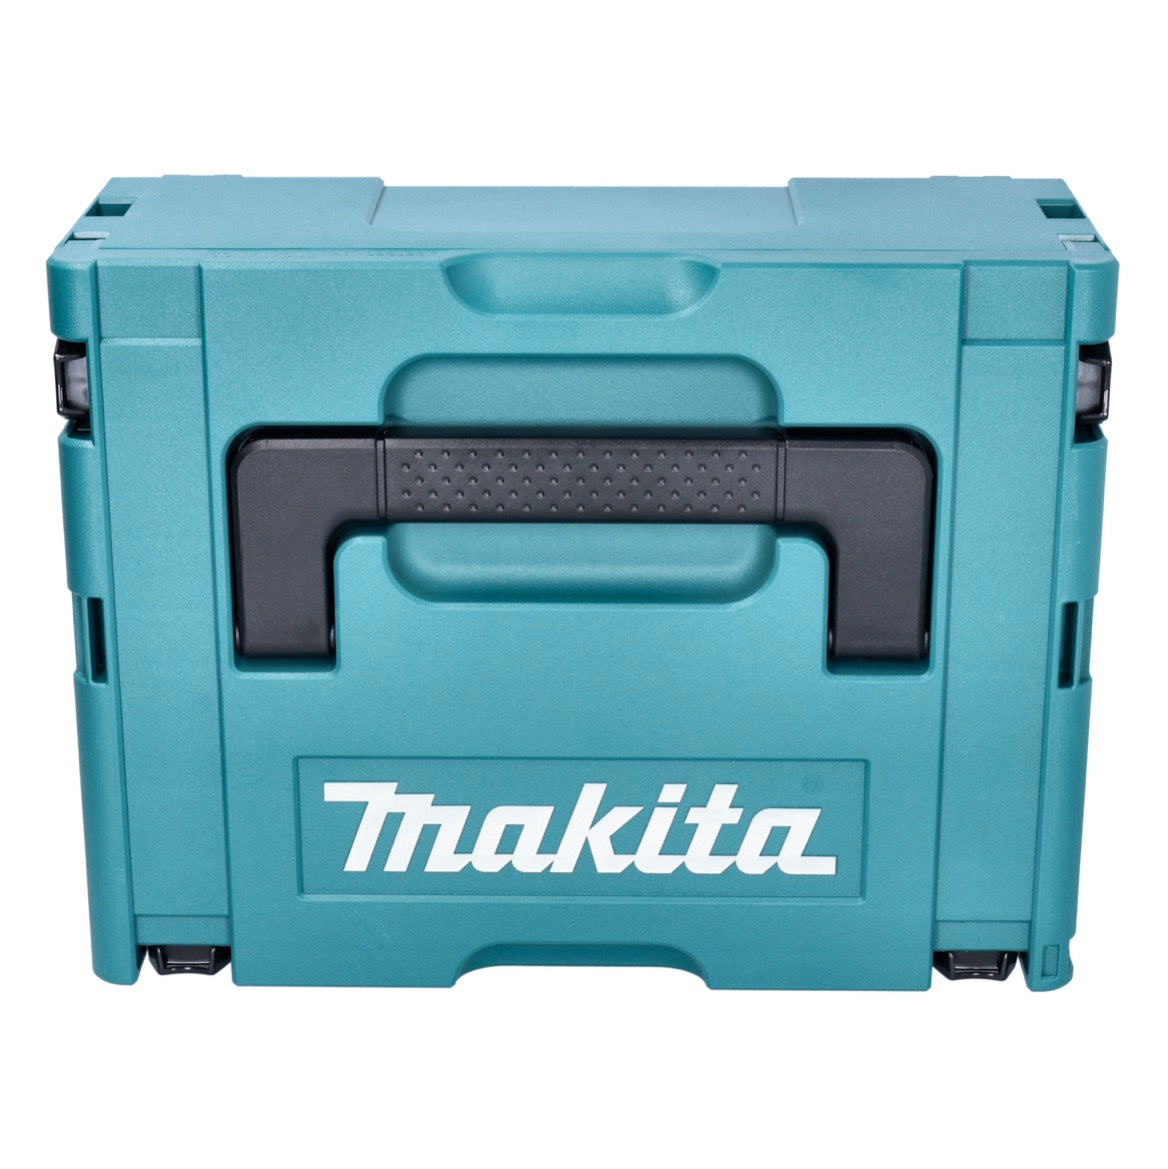 Makita DDF 489 F1J Akku Bohrschrauber 18 V 73 Nm Brushless + 1x Akku 3,0 Ah + Makpac - ohne Ladegerät